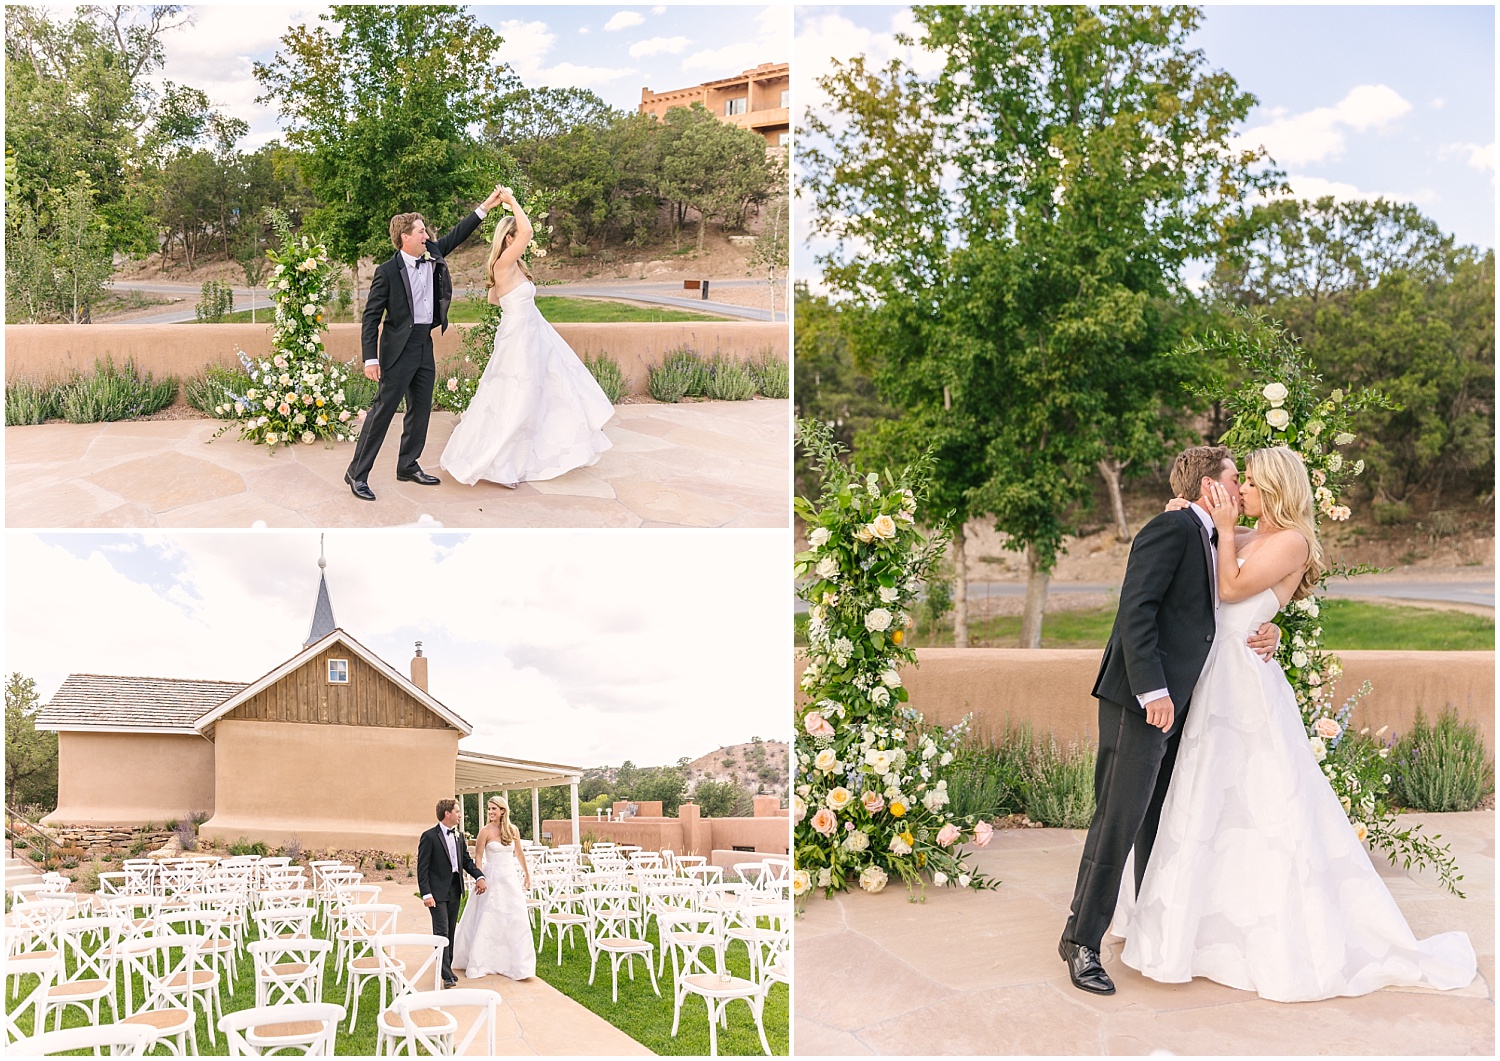 Bride and groom portraits at the historic chapel garden at Bishop's Lodge wedding venue in Santa Fe